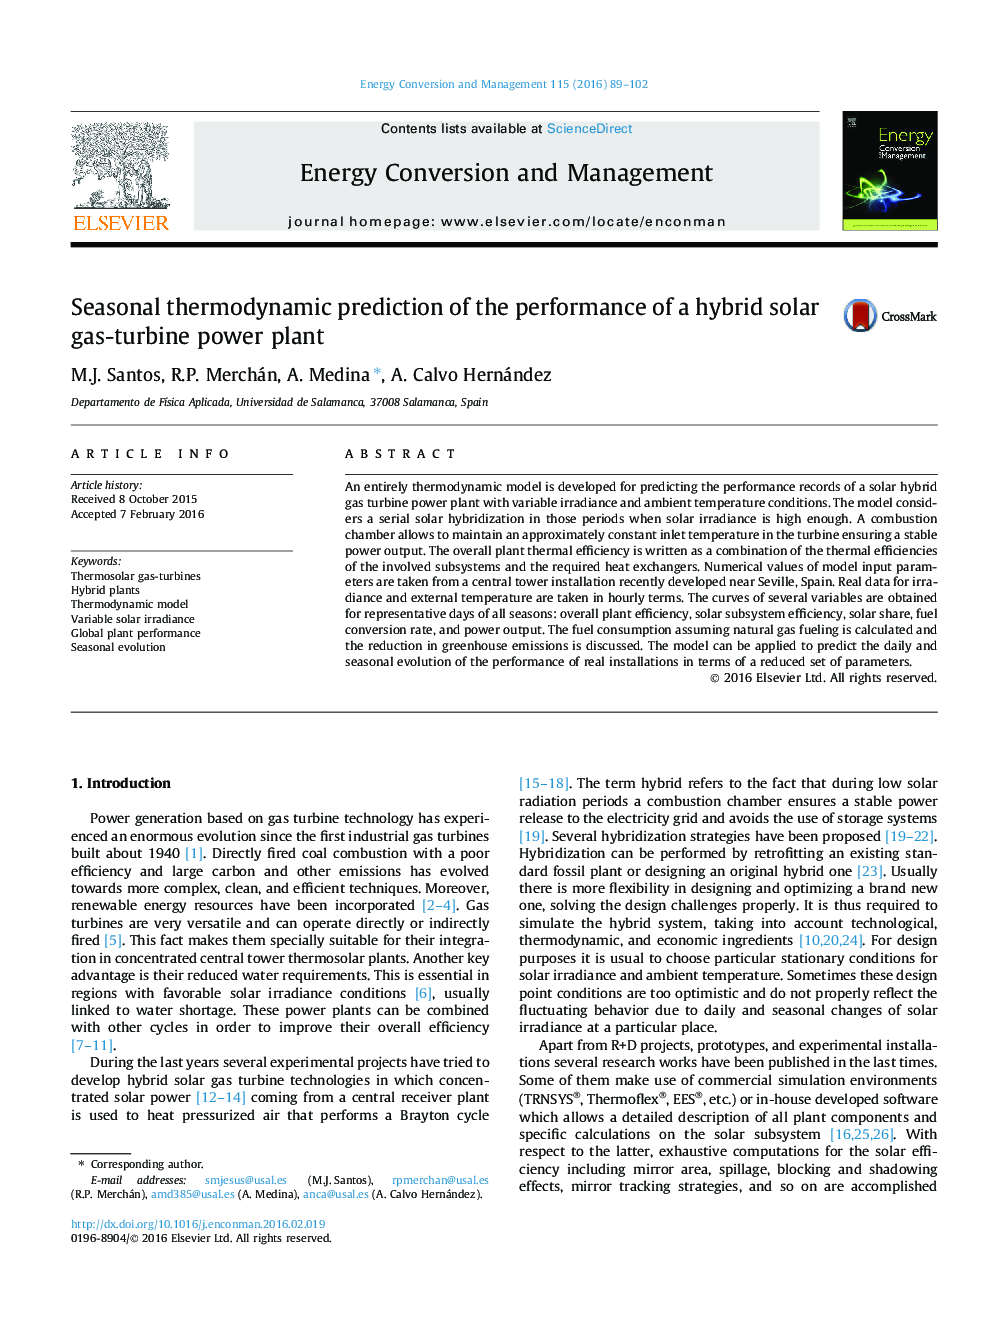 Seasonal thermodynamic prediction of the performance of a hybrid solar gas-turbine power plant